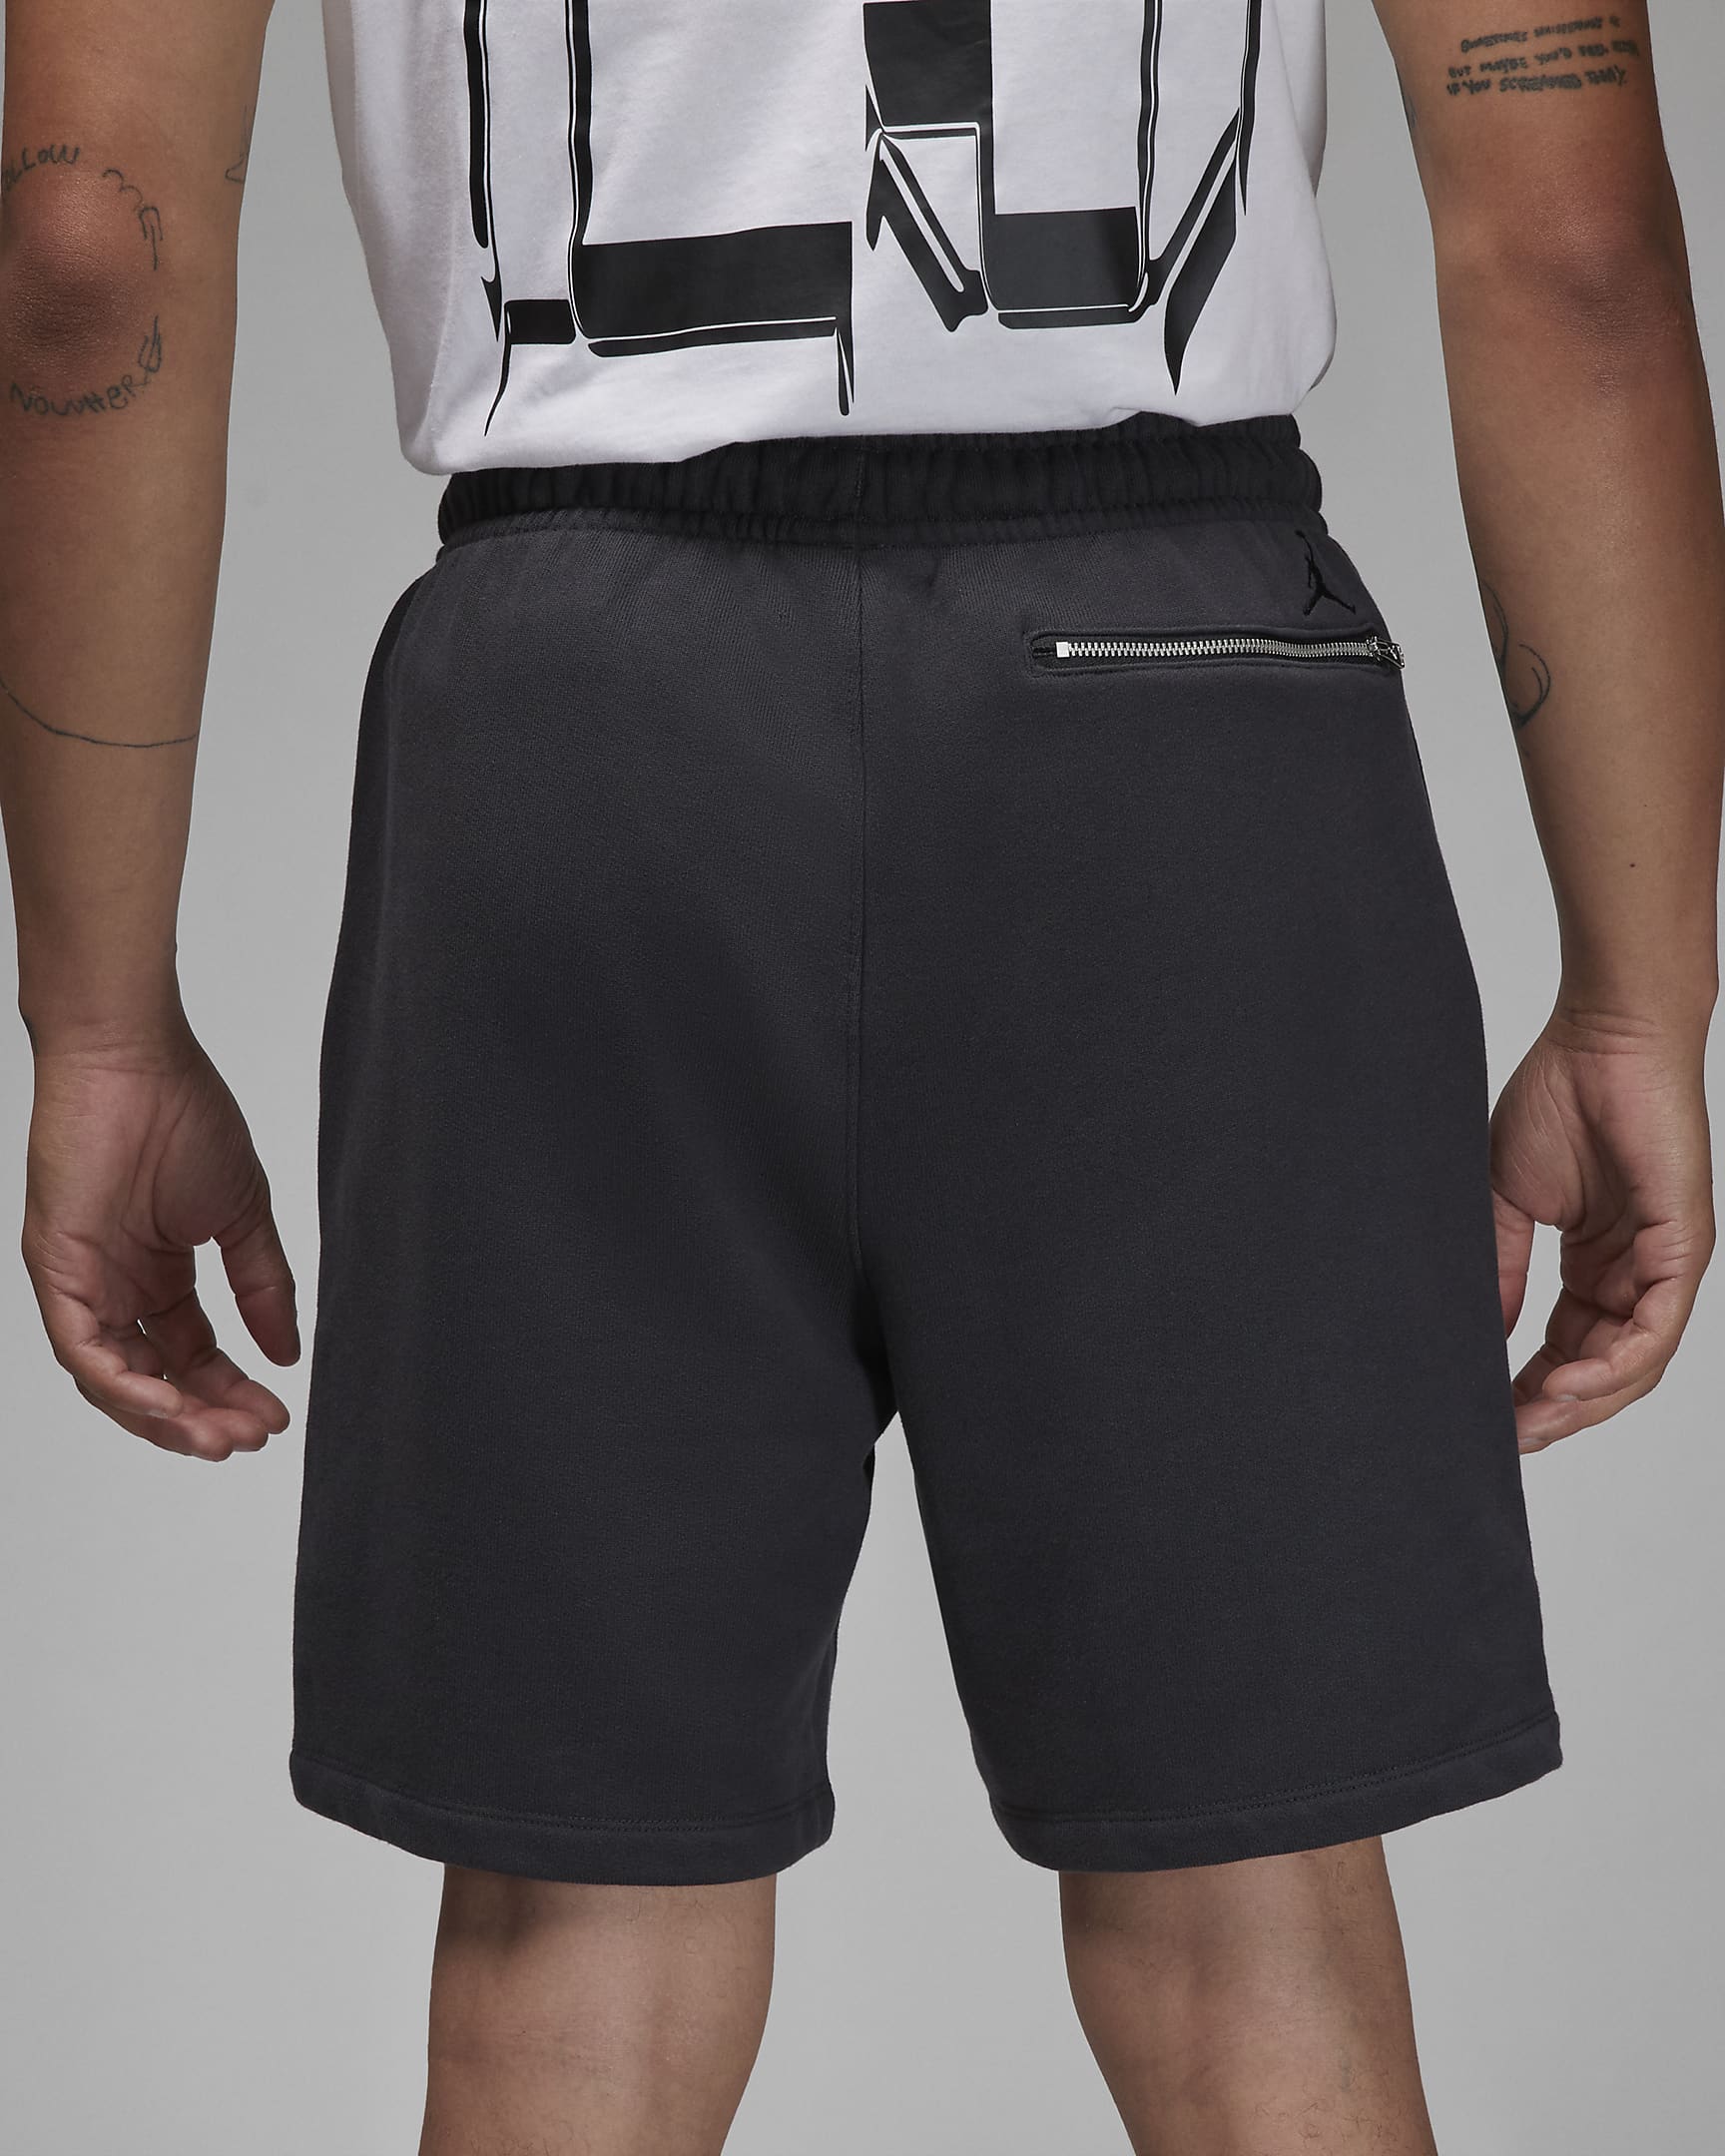 Air Jordan Wordmark Men's Fleece Shorts. Nike CA